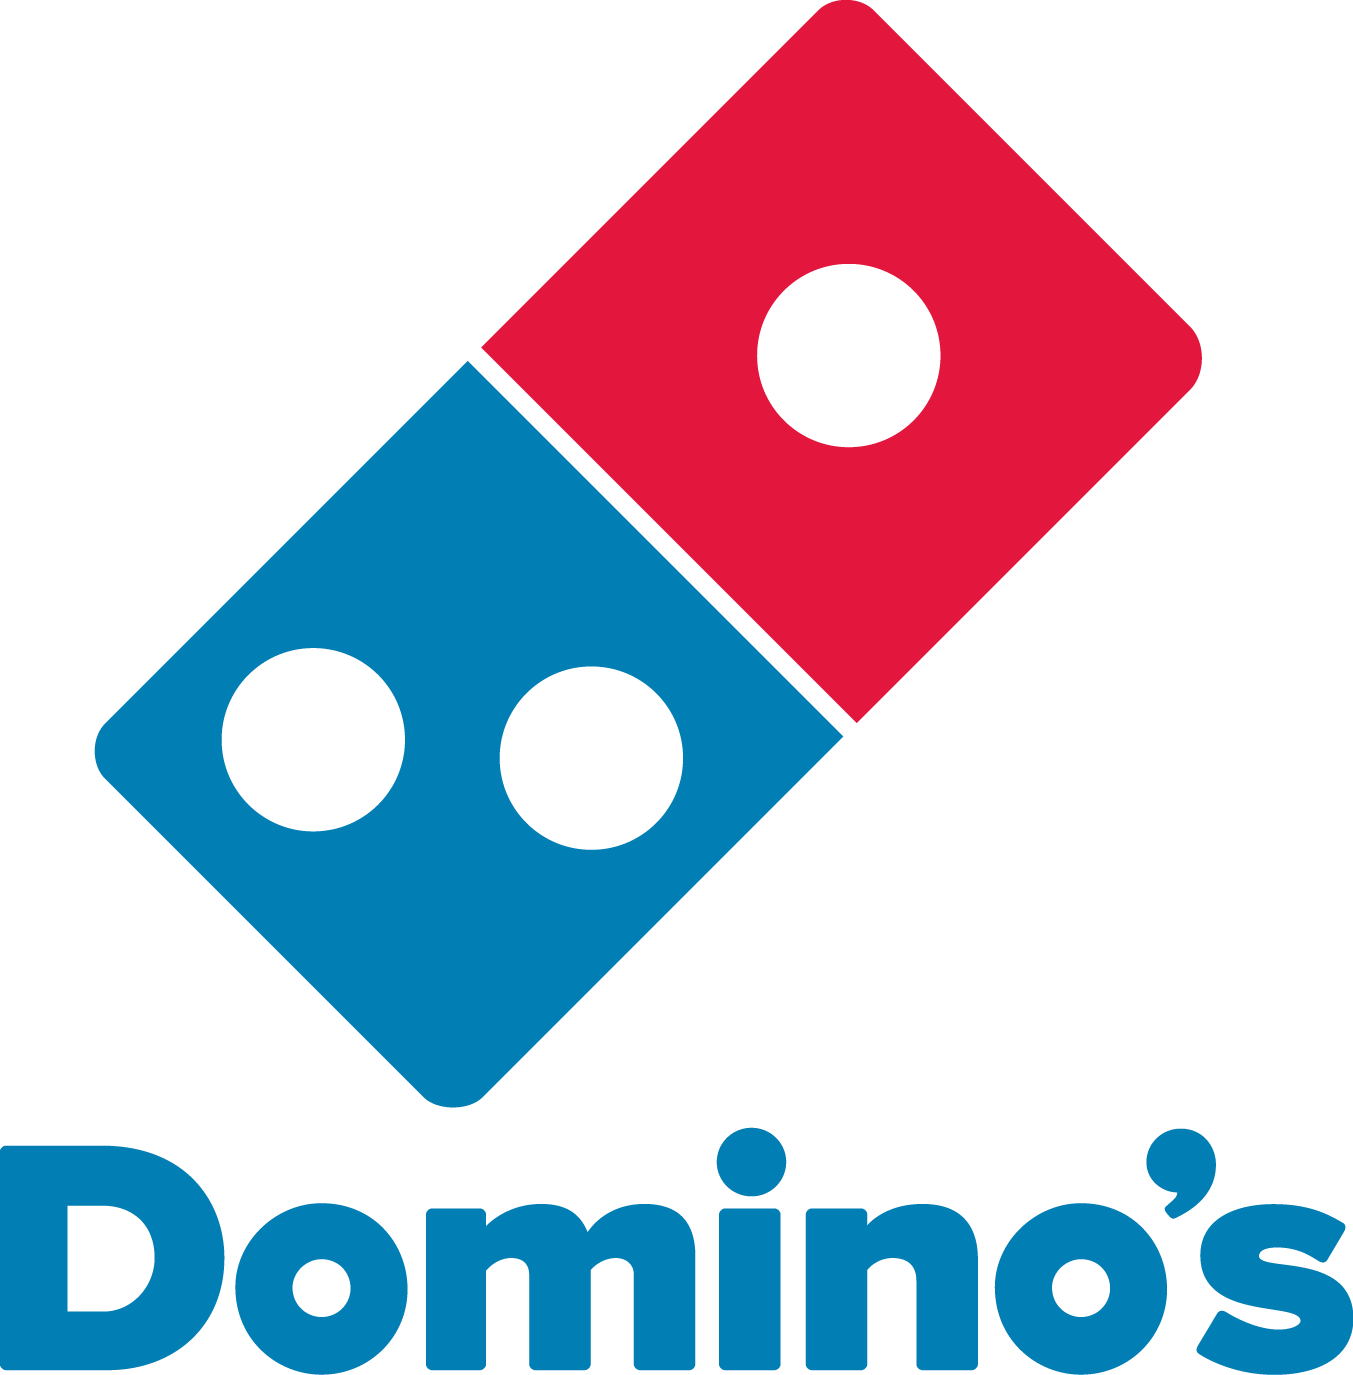 Save - Domino's Pizza (1353x1375)